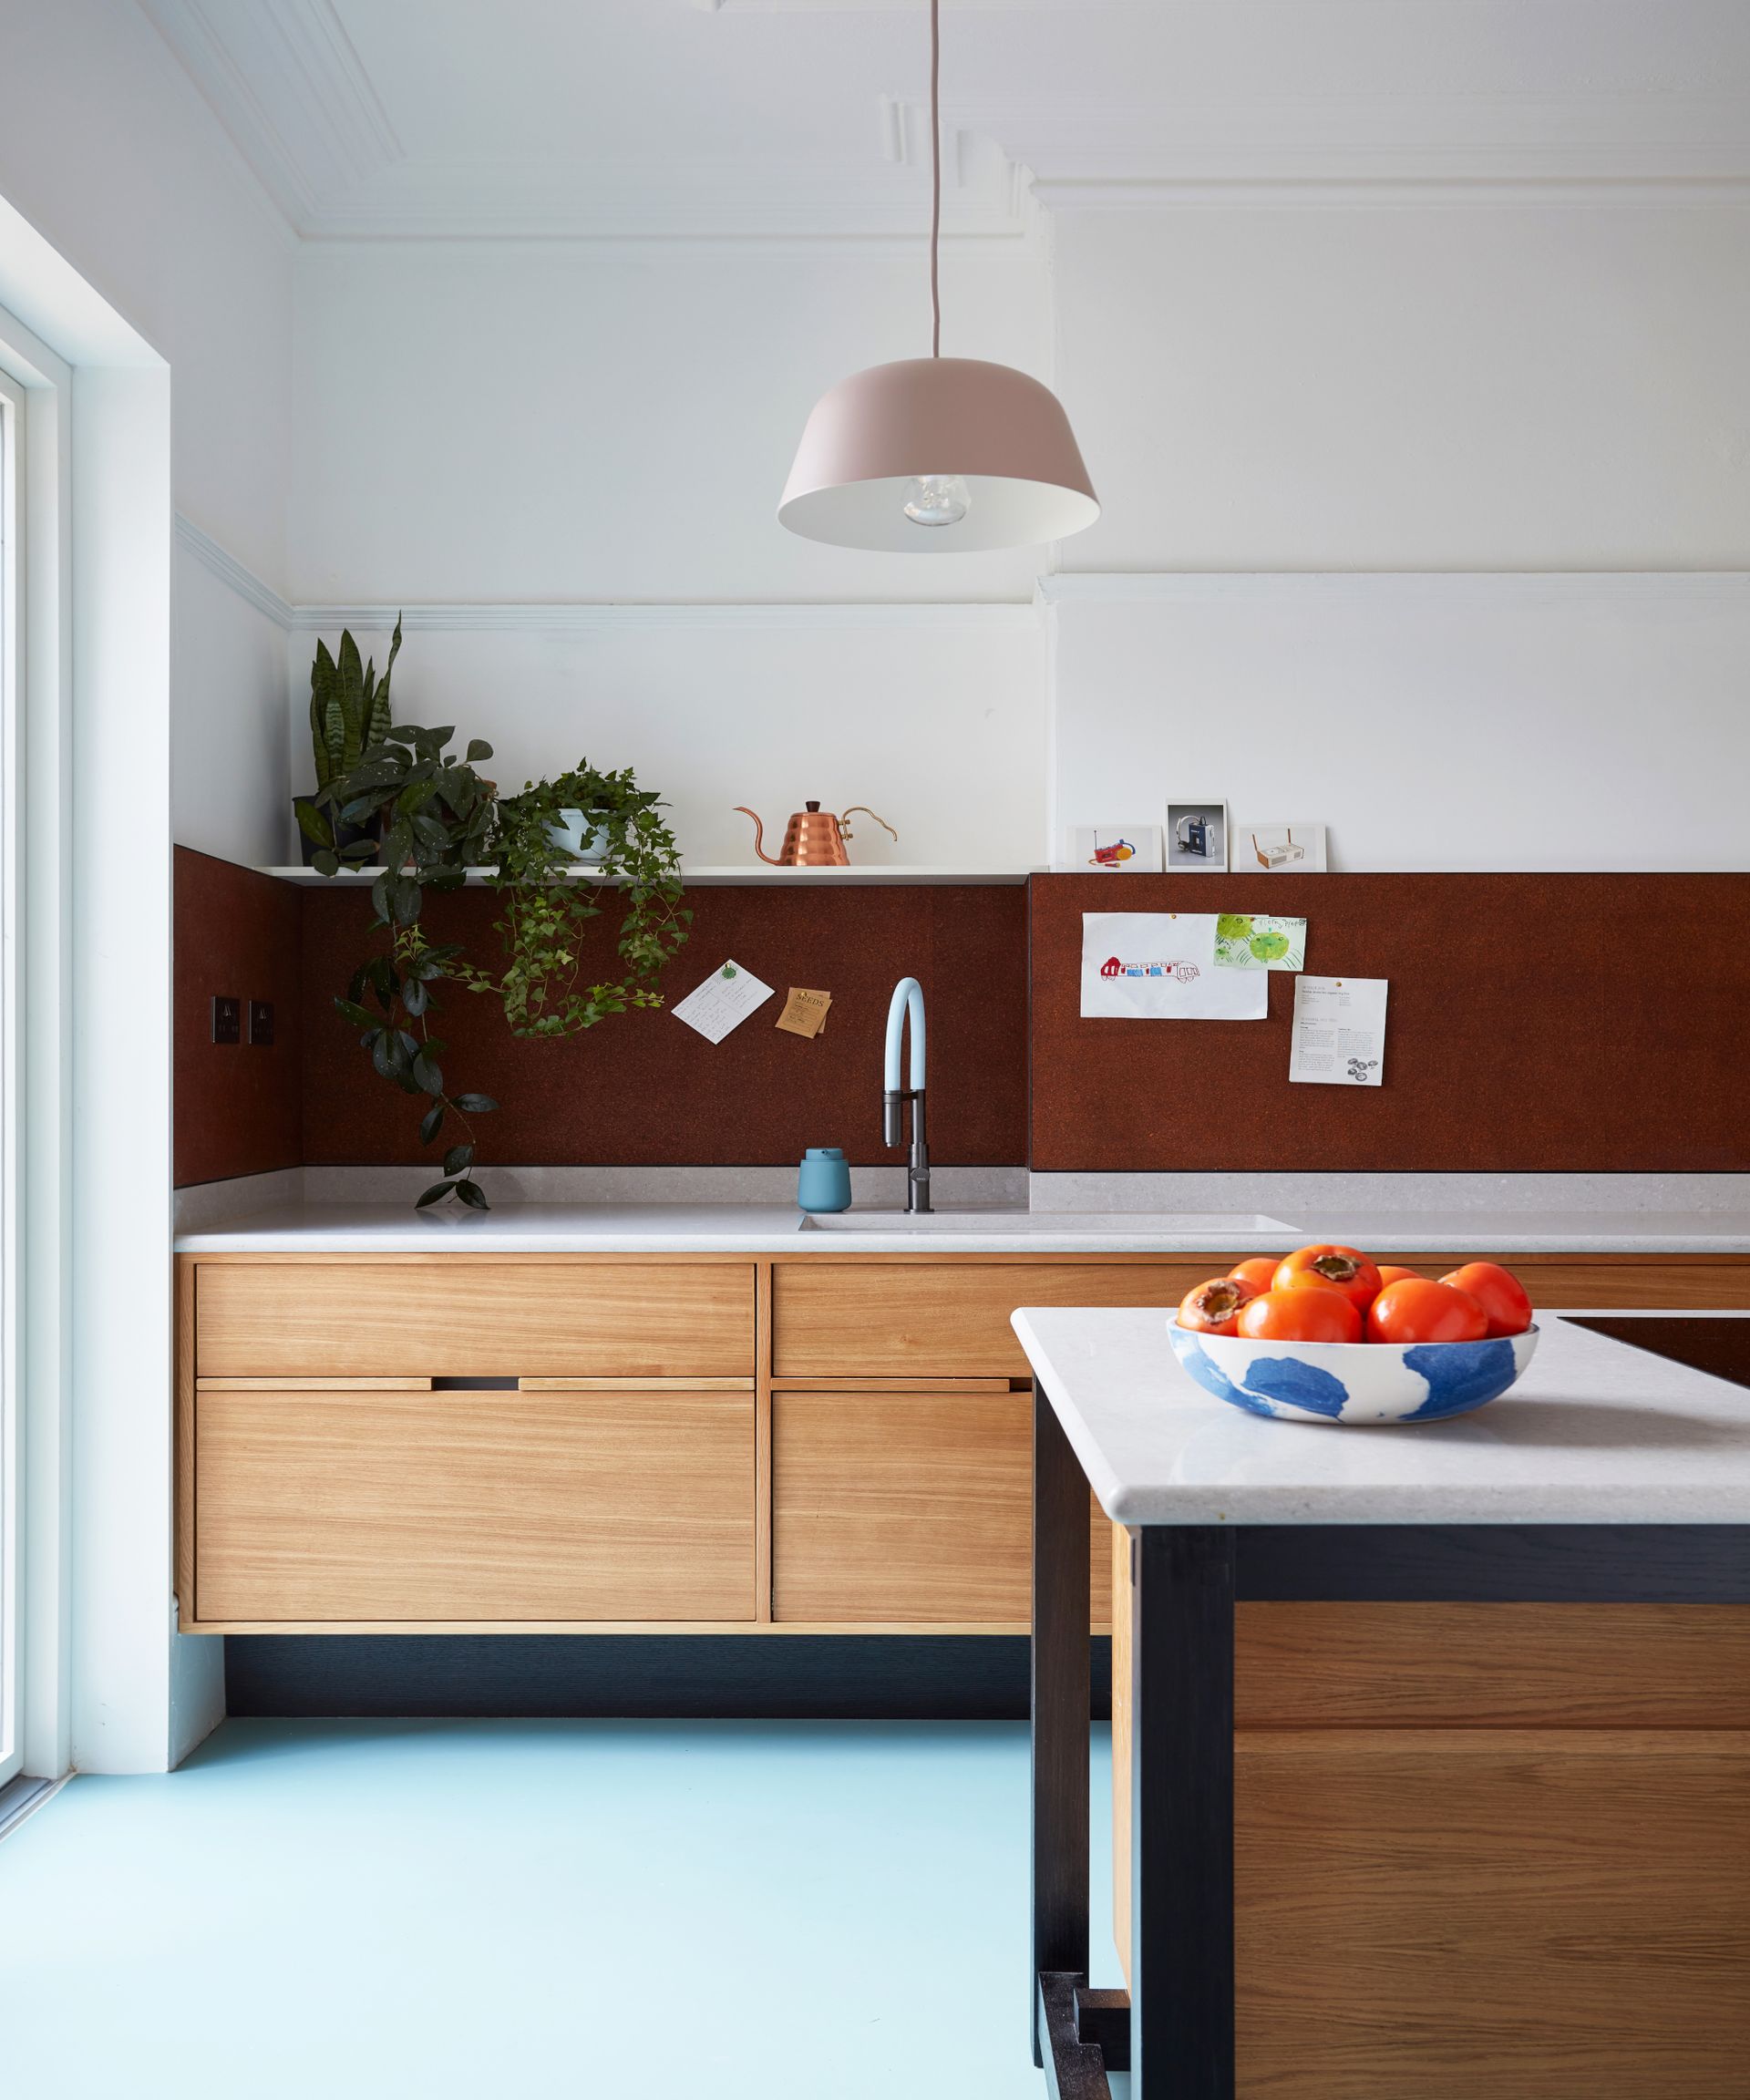 Vinyl kitchen flooring ideas – practical advice and inspiring styles ...